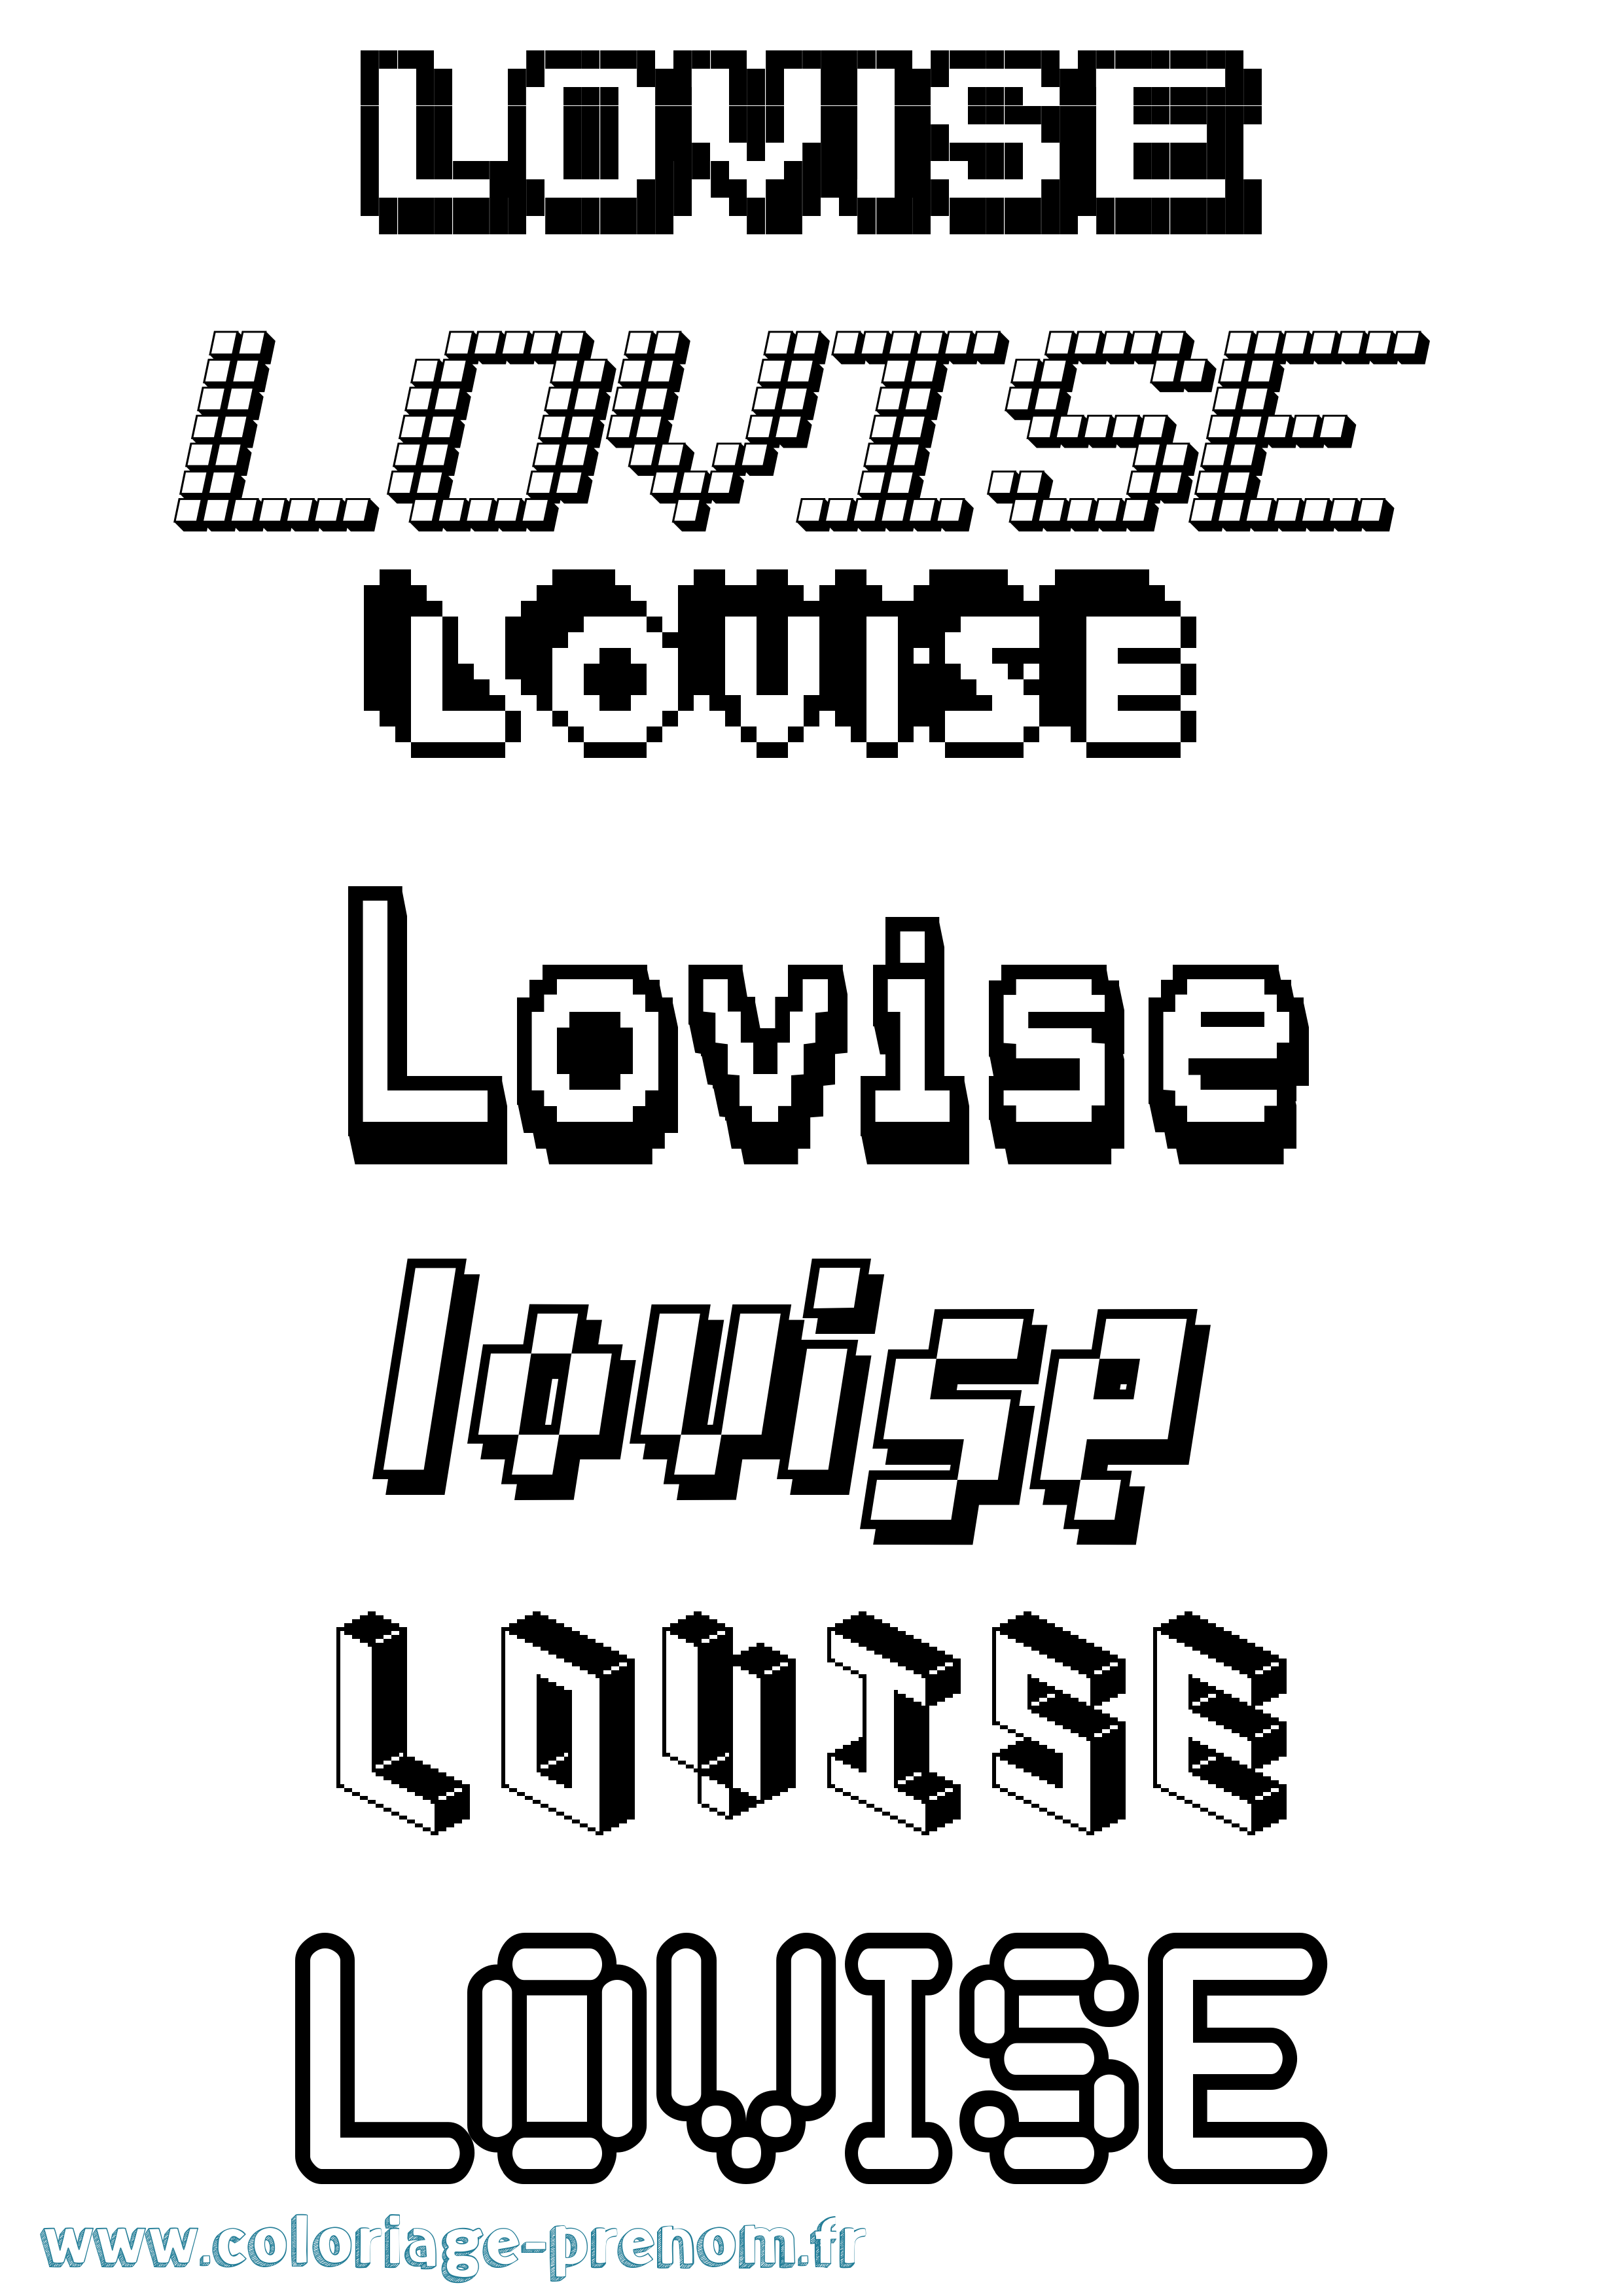 Coloriage prénom Lovise Pixel